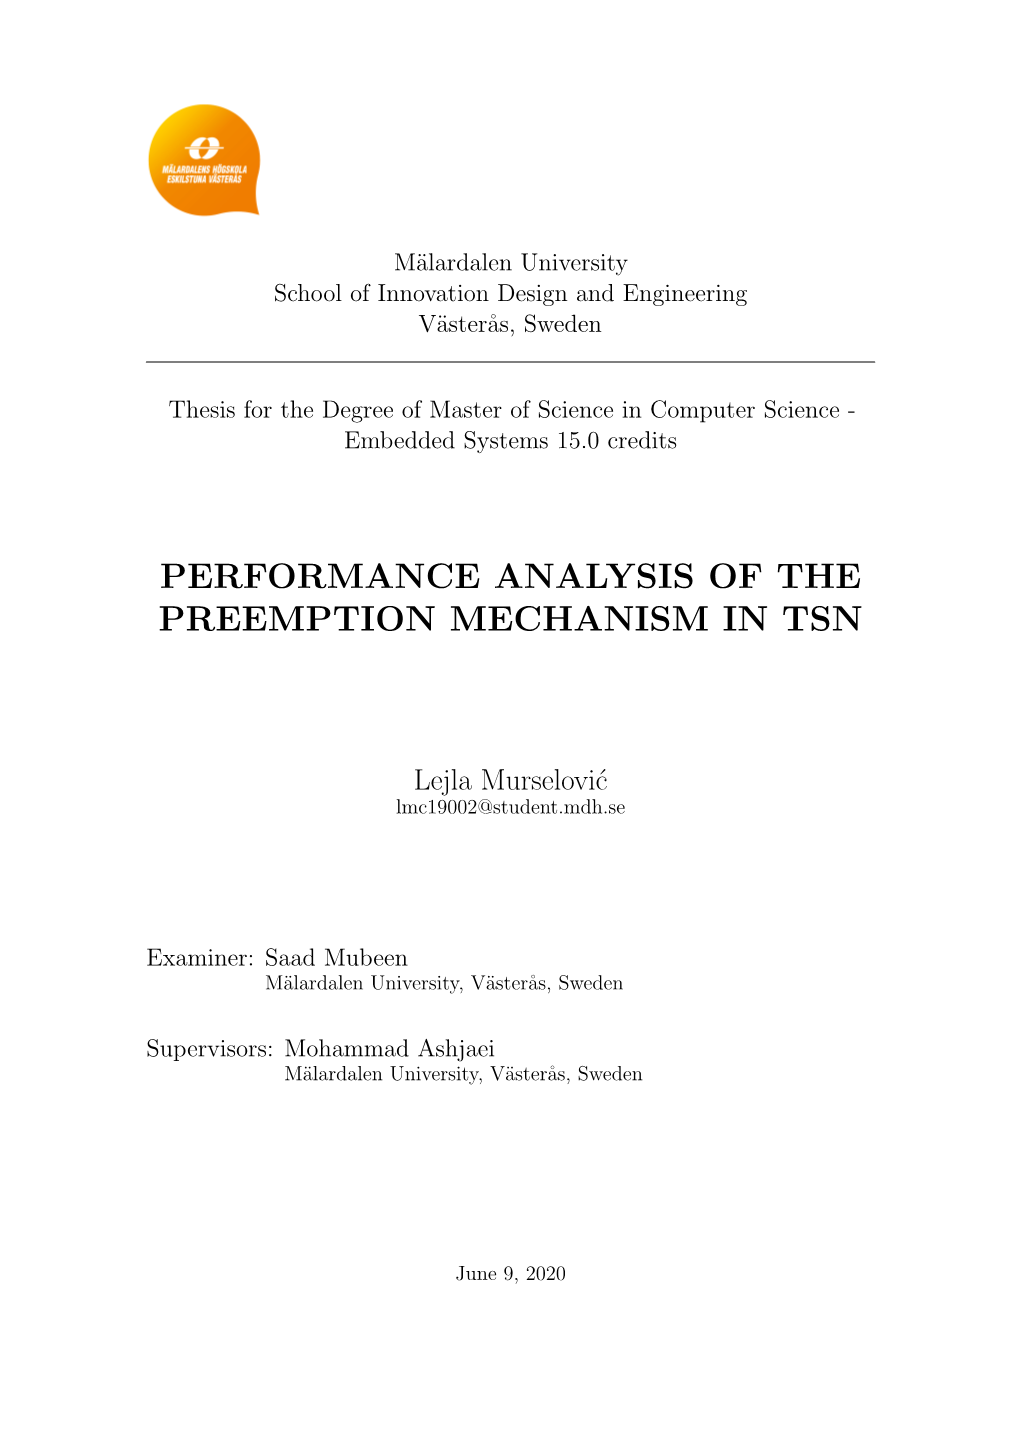 Performance Analysis of the Preemption Mechanism in Tsn